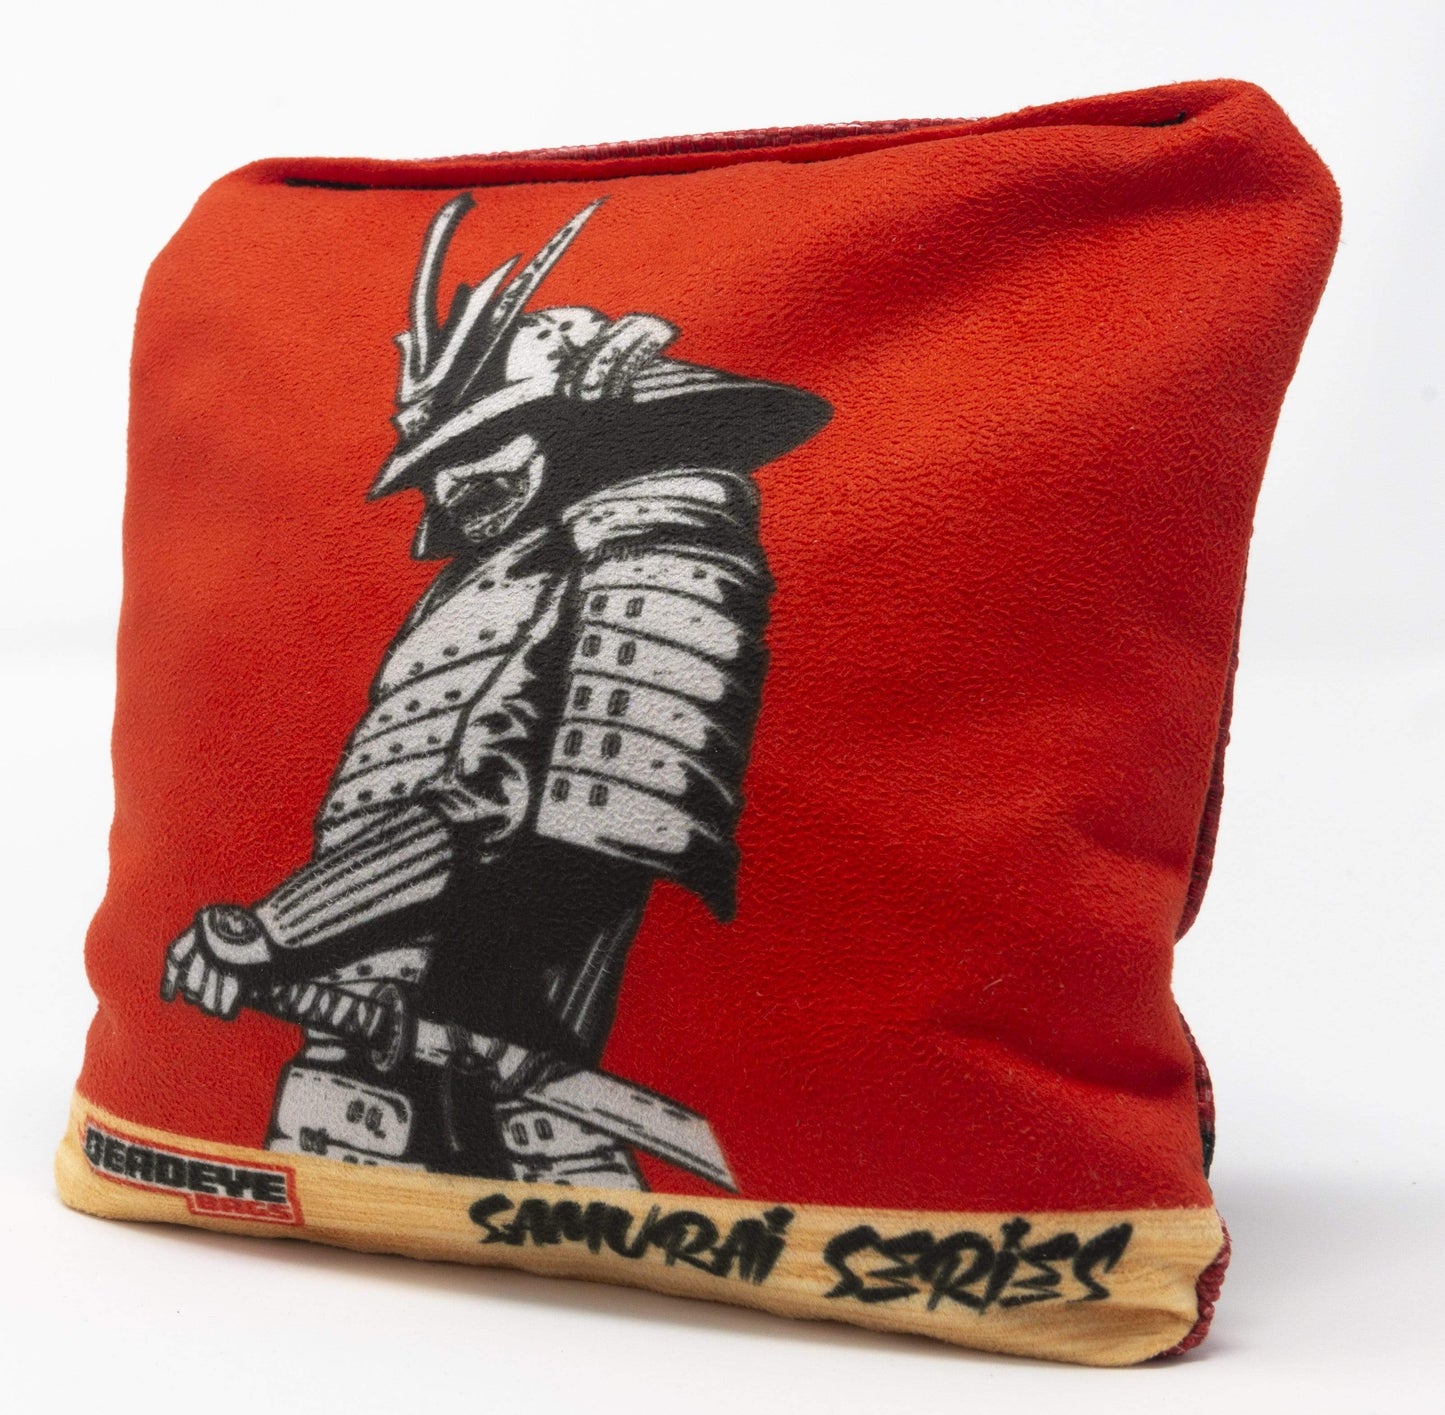 Pro Cornhole Bags - Armored Samurai - Red